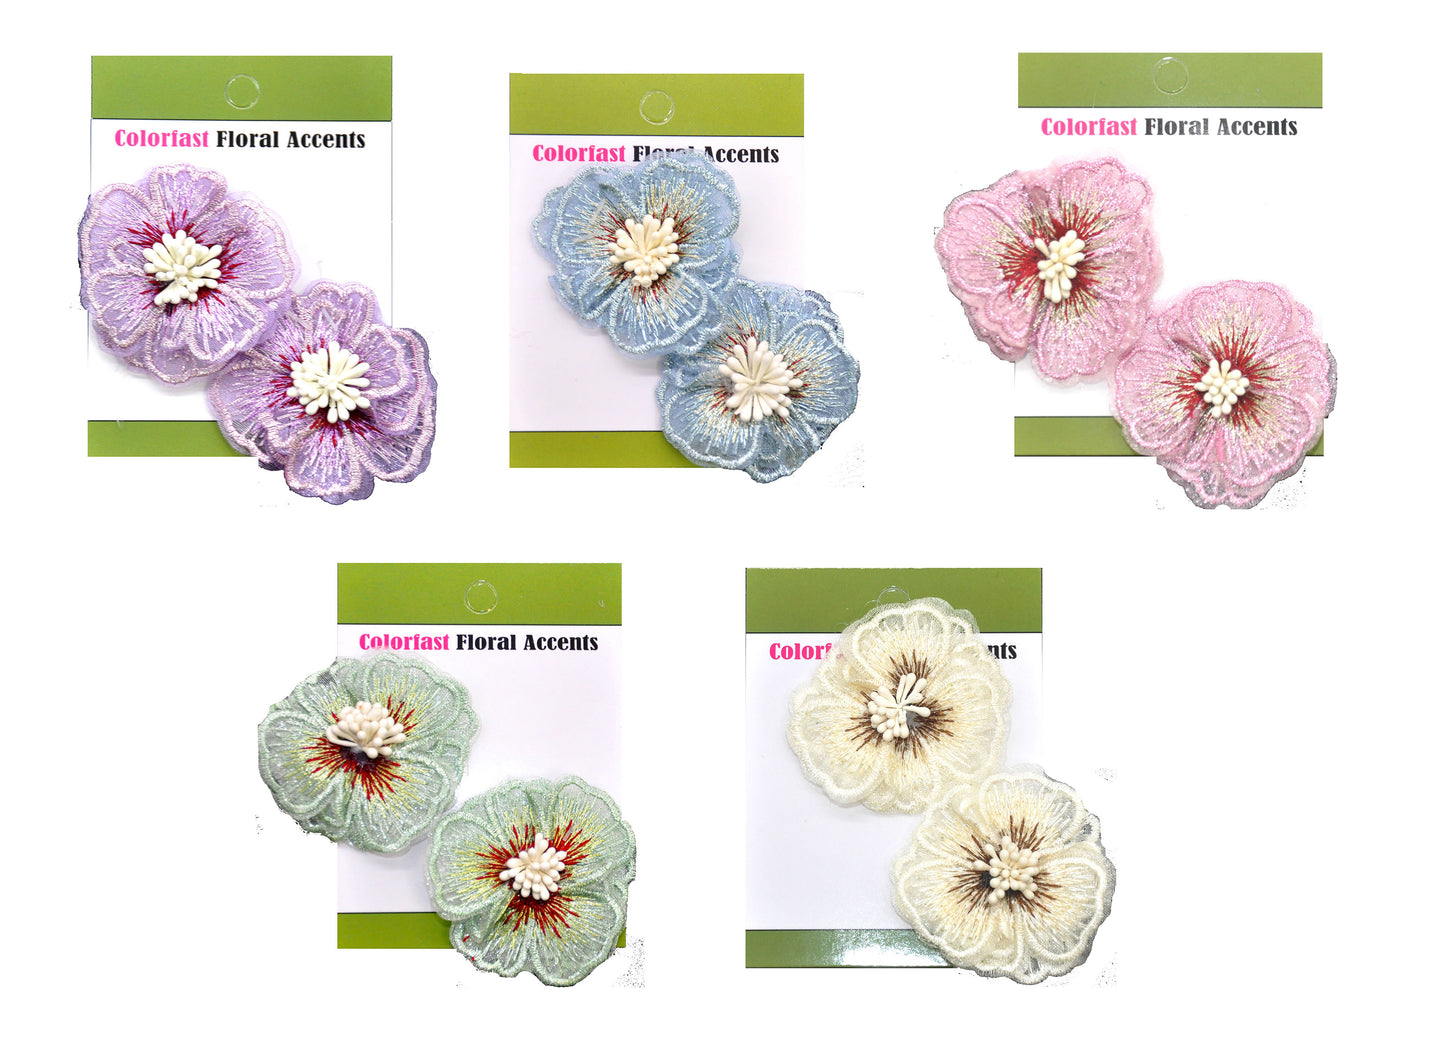 Embroidered Flower Applique - 2" round-BPP-M2-08 (6 Cards Per Order)